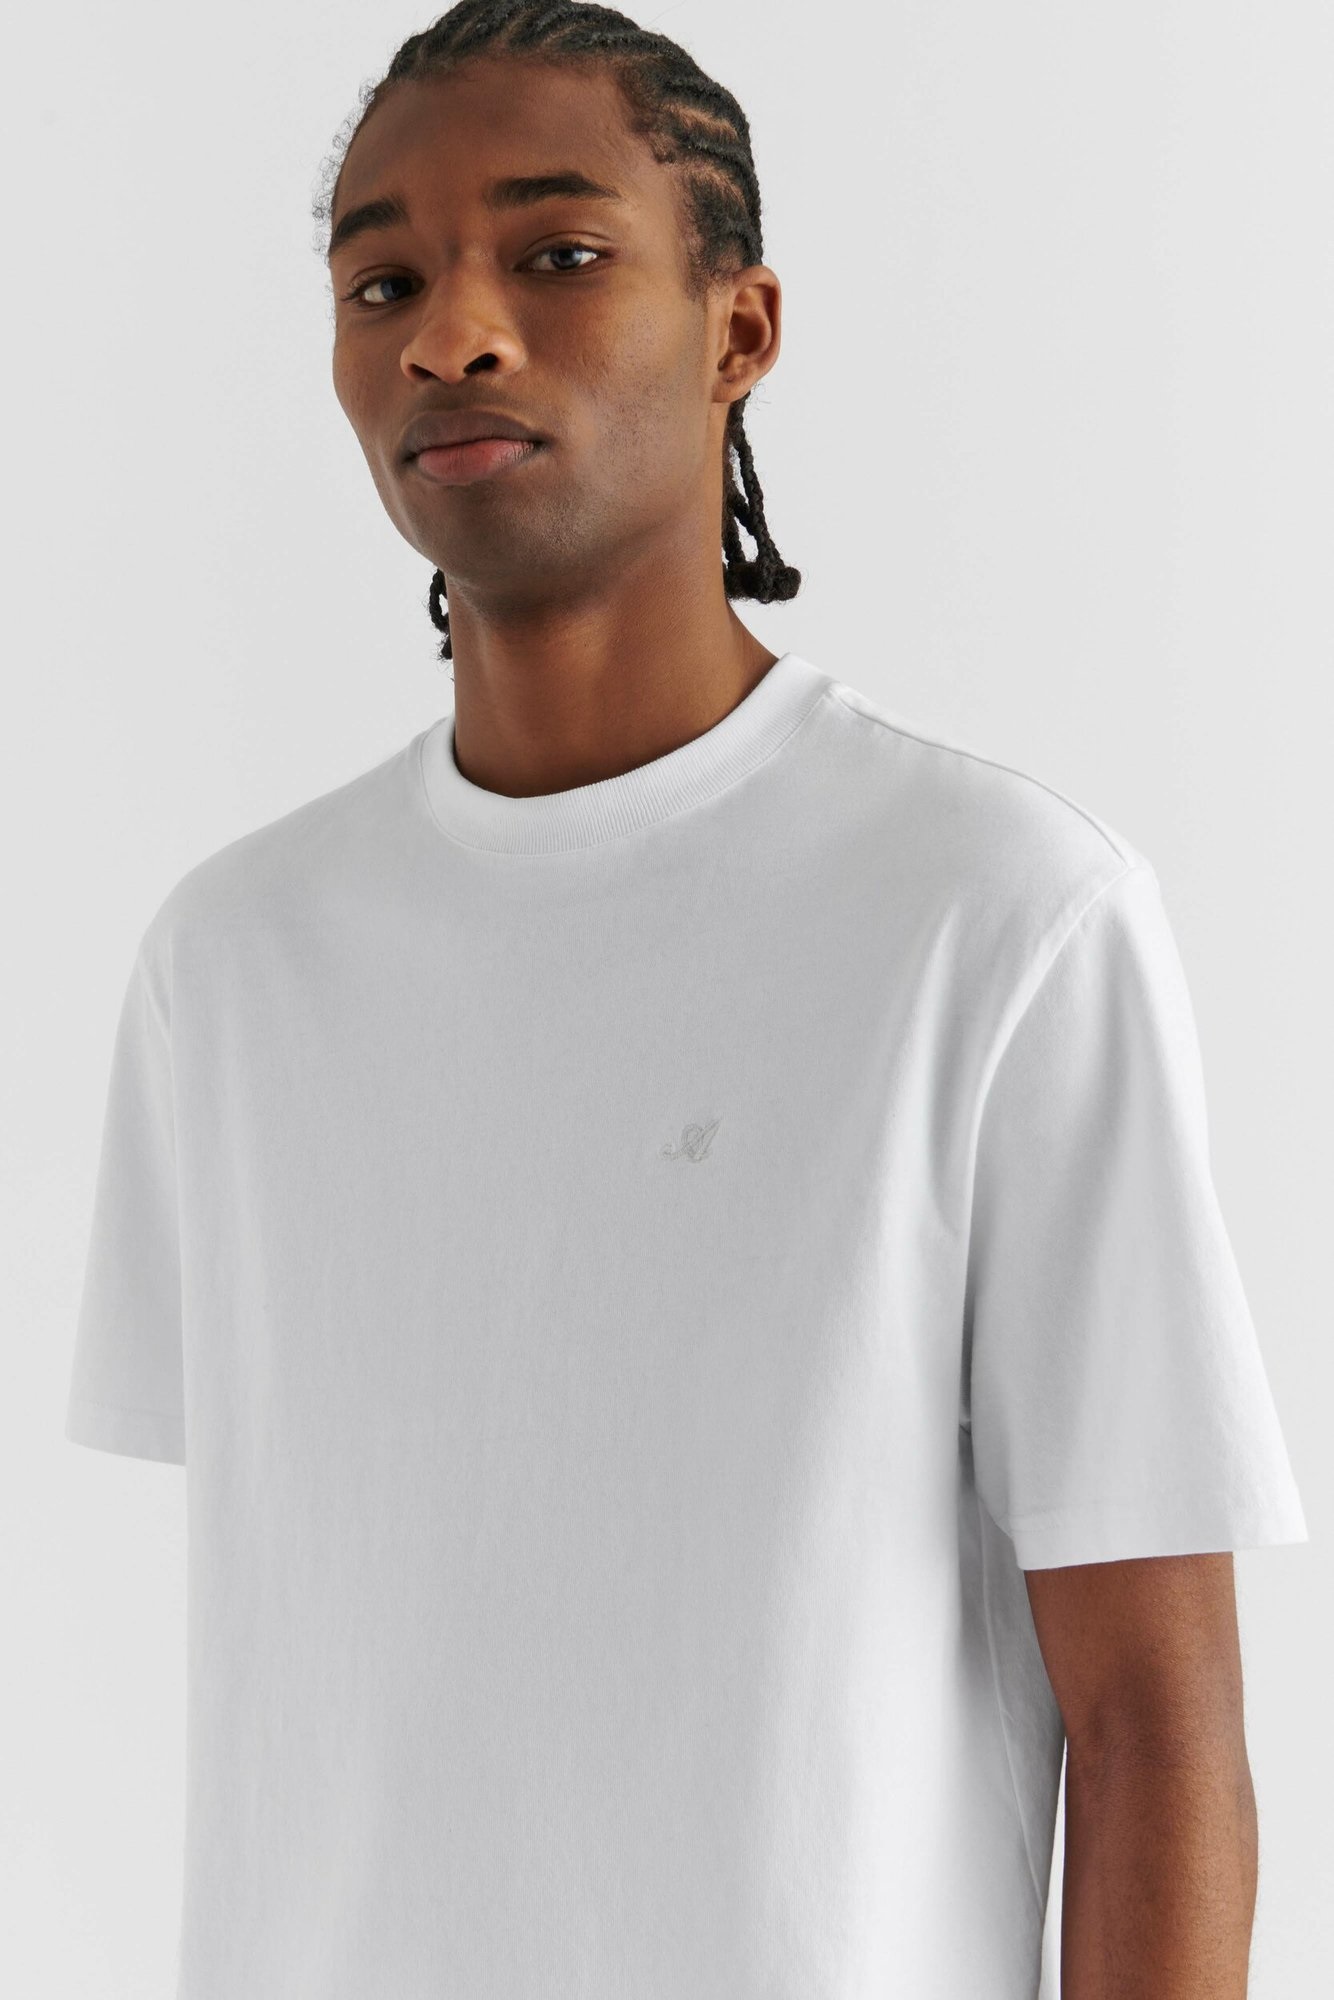 AXEL ARIGATO Signature T-Shirt in White XL